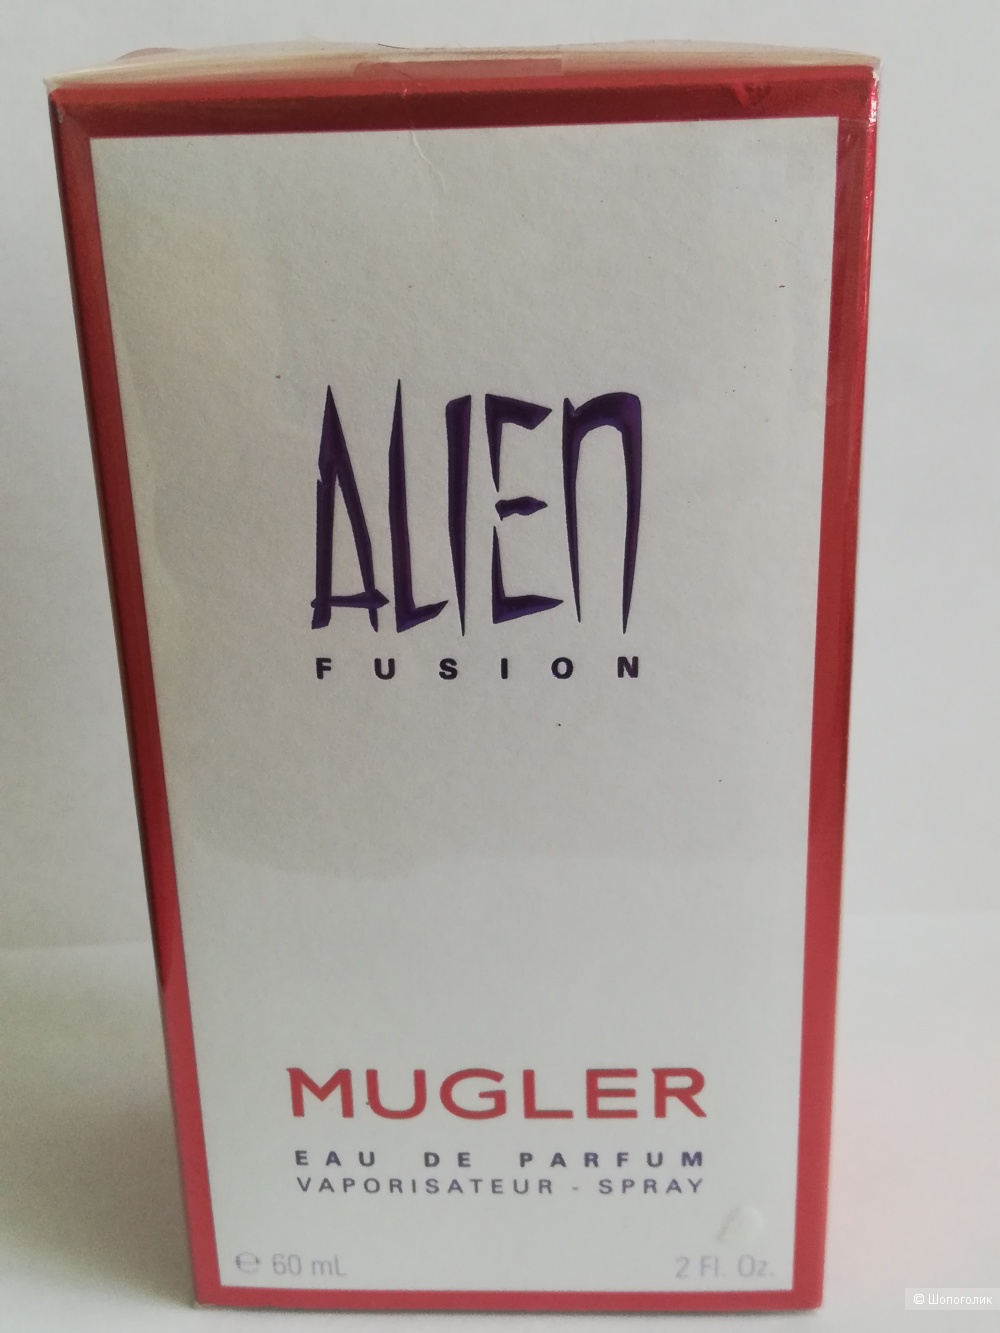 Thierry Mugler edp Alien fusion 60 мл